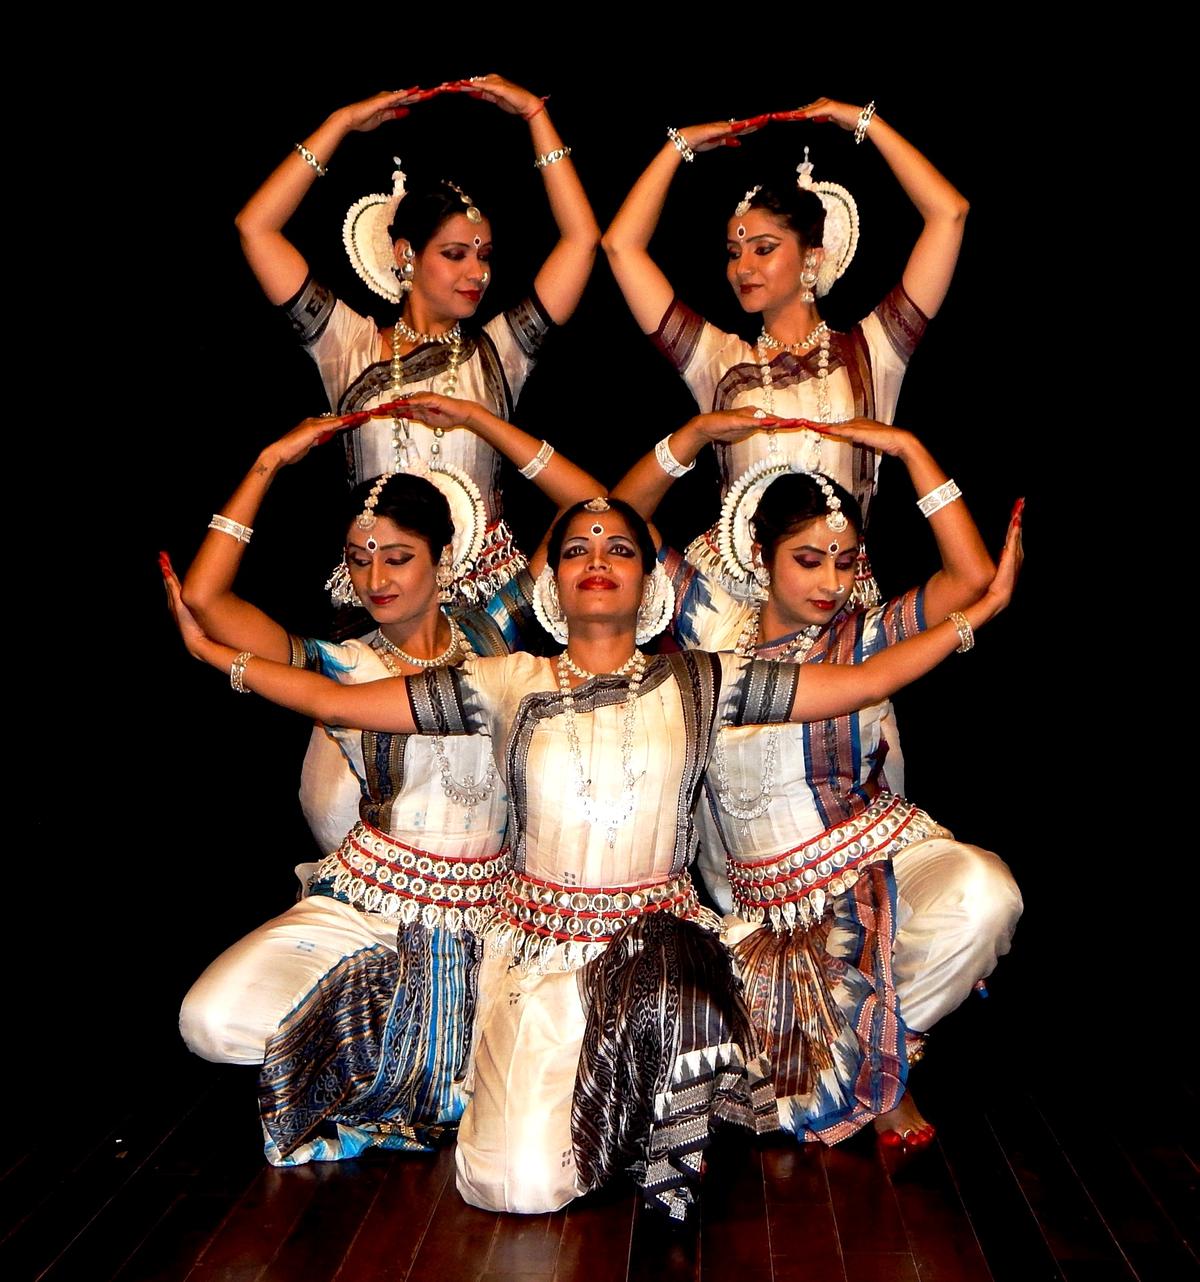 Madhulita Mohapatra and her dance troupe Nrityantar Dance Ensemble from Bengaluru